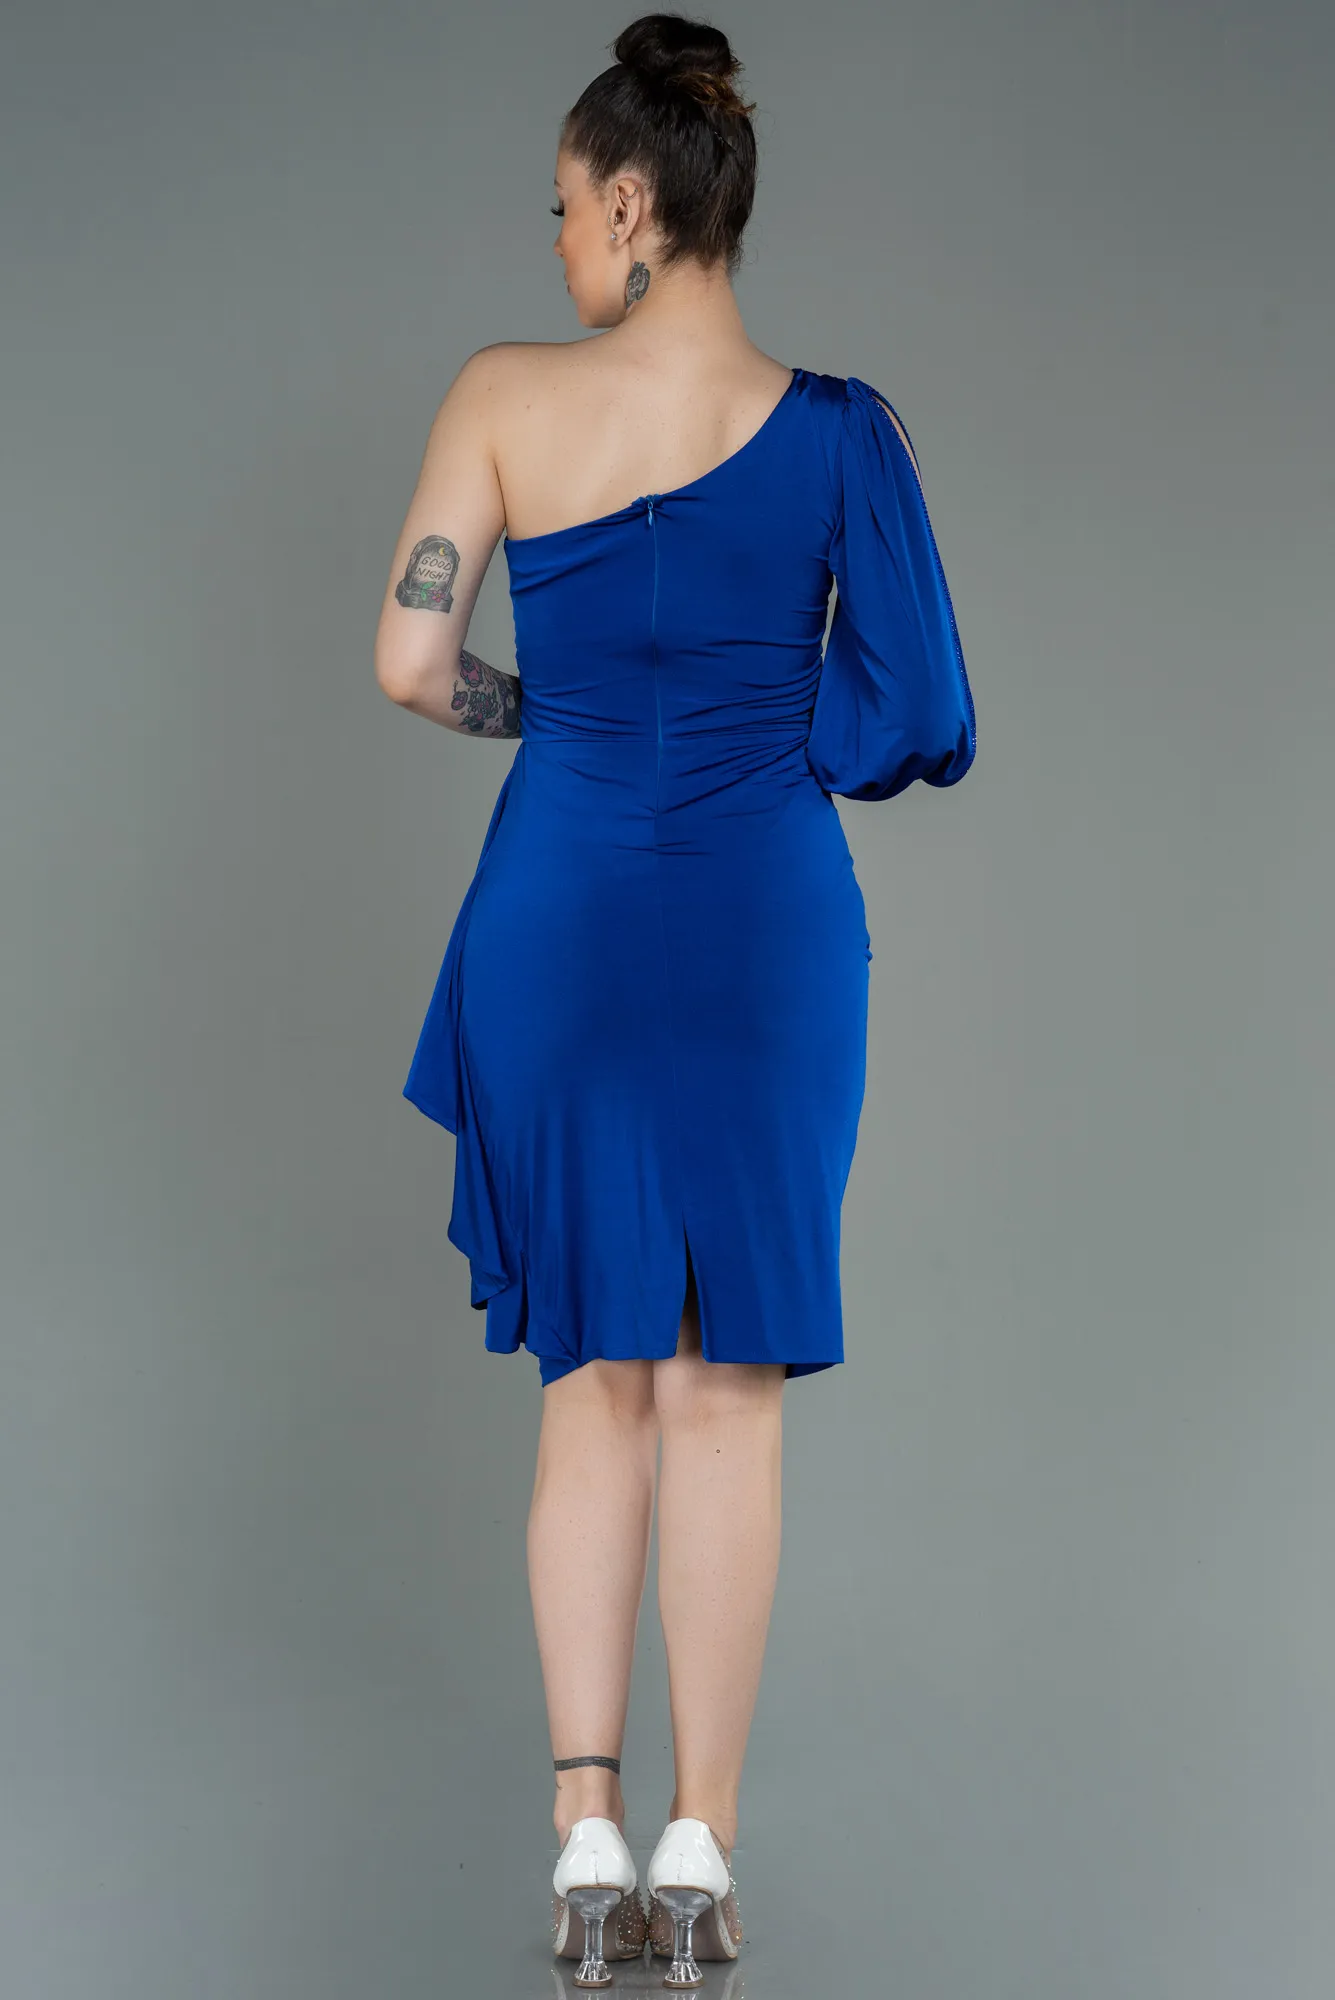 Sax Blue-Short Invitation Dress ABK1762